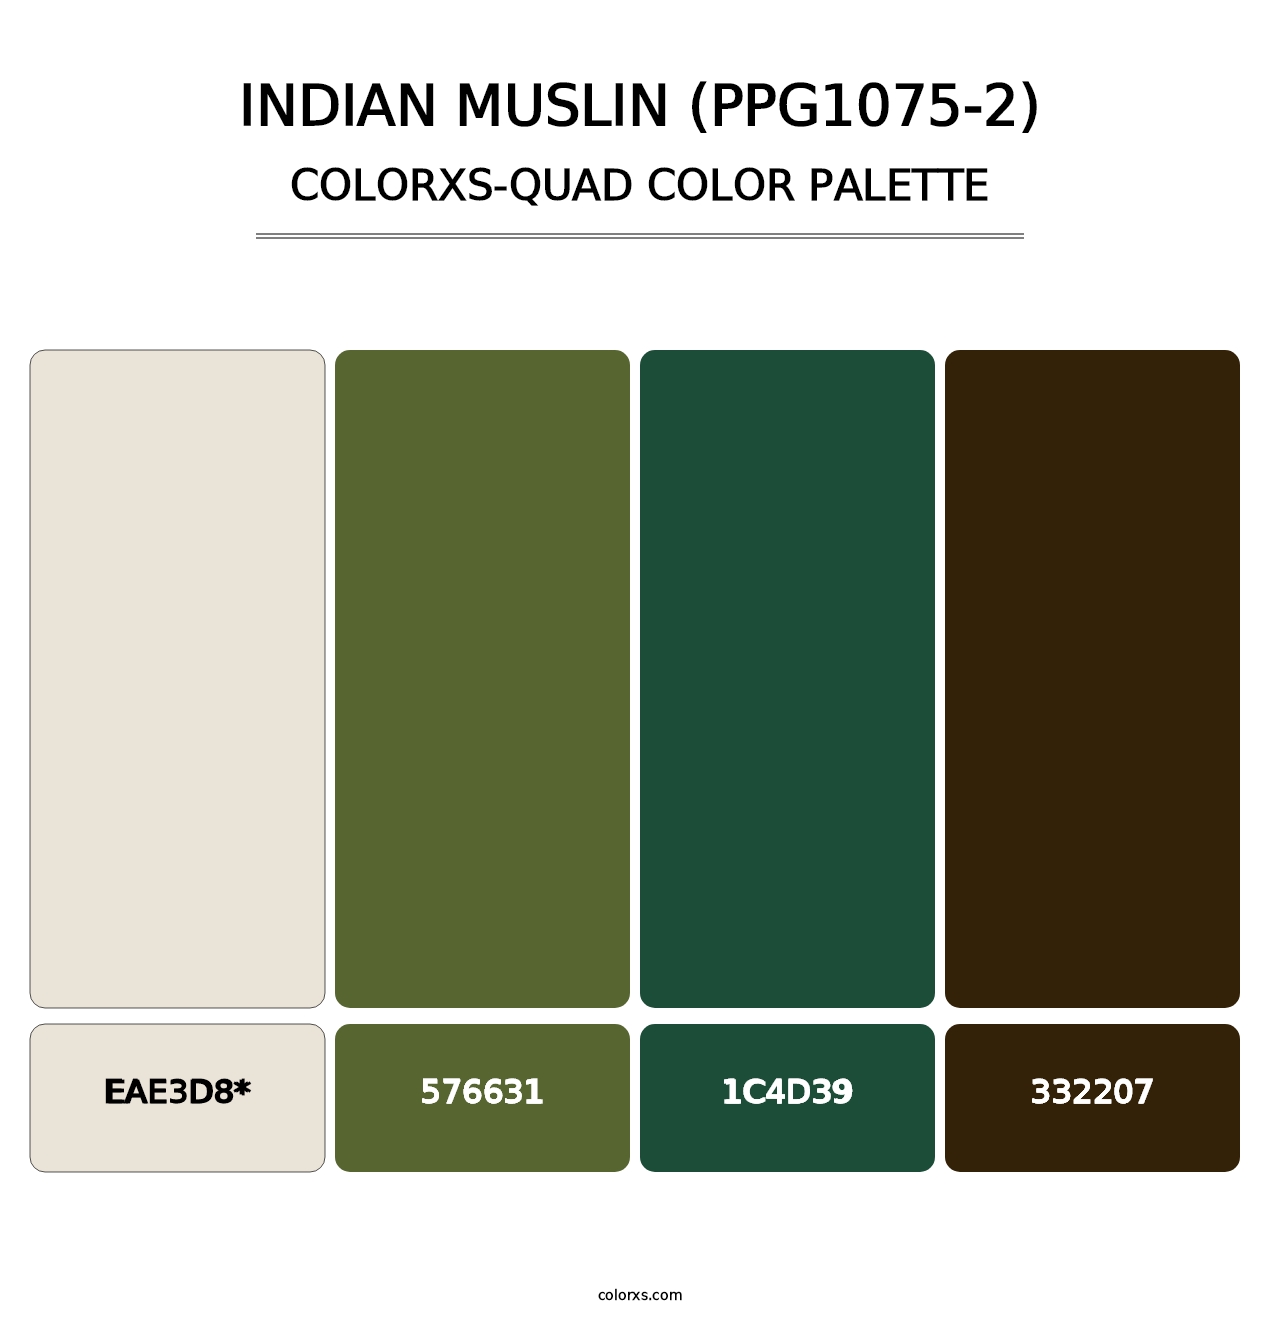 Indian Muslin (PPG1075-2) - Colorxs Quad Palette